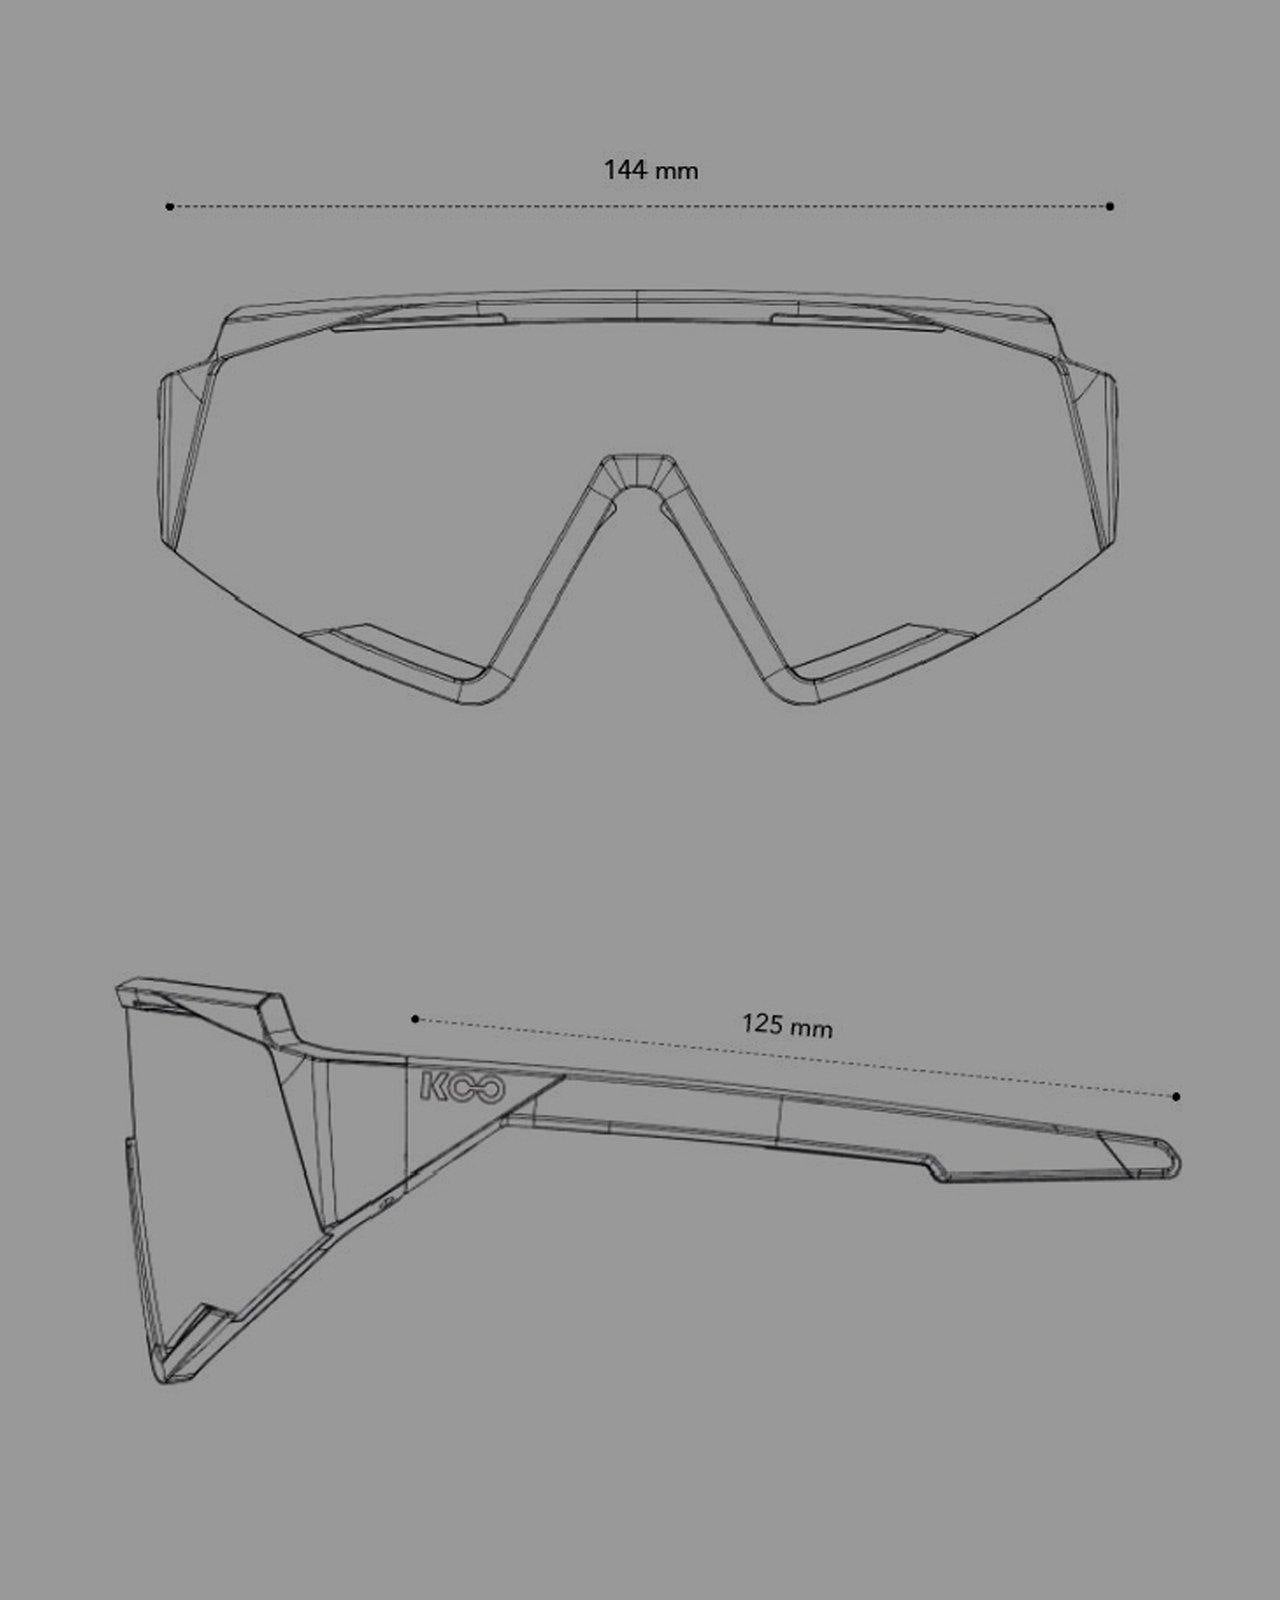 Spectro Cykelbriller - KOO - Sort & Rød | KOO | gioventu.cc